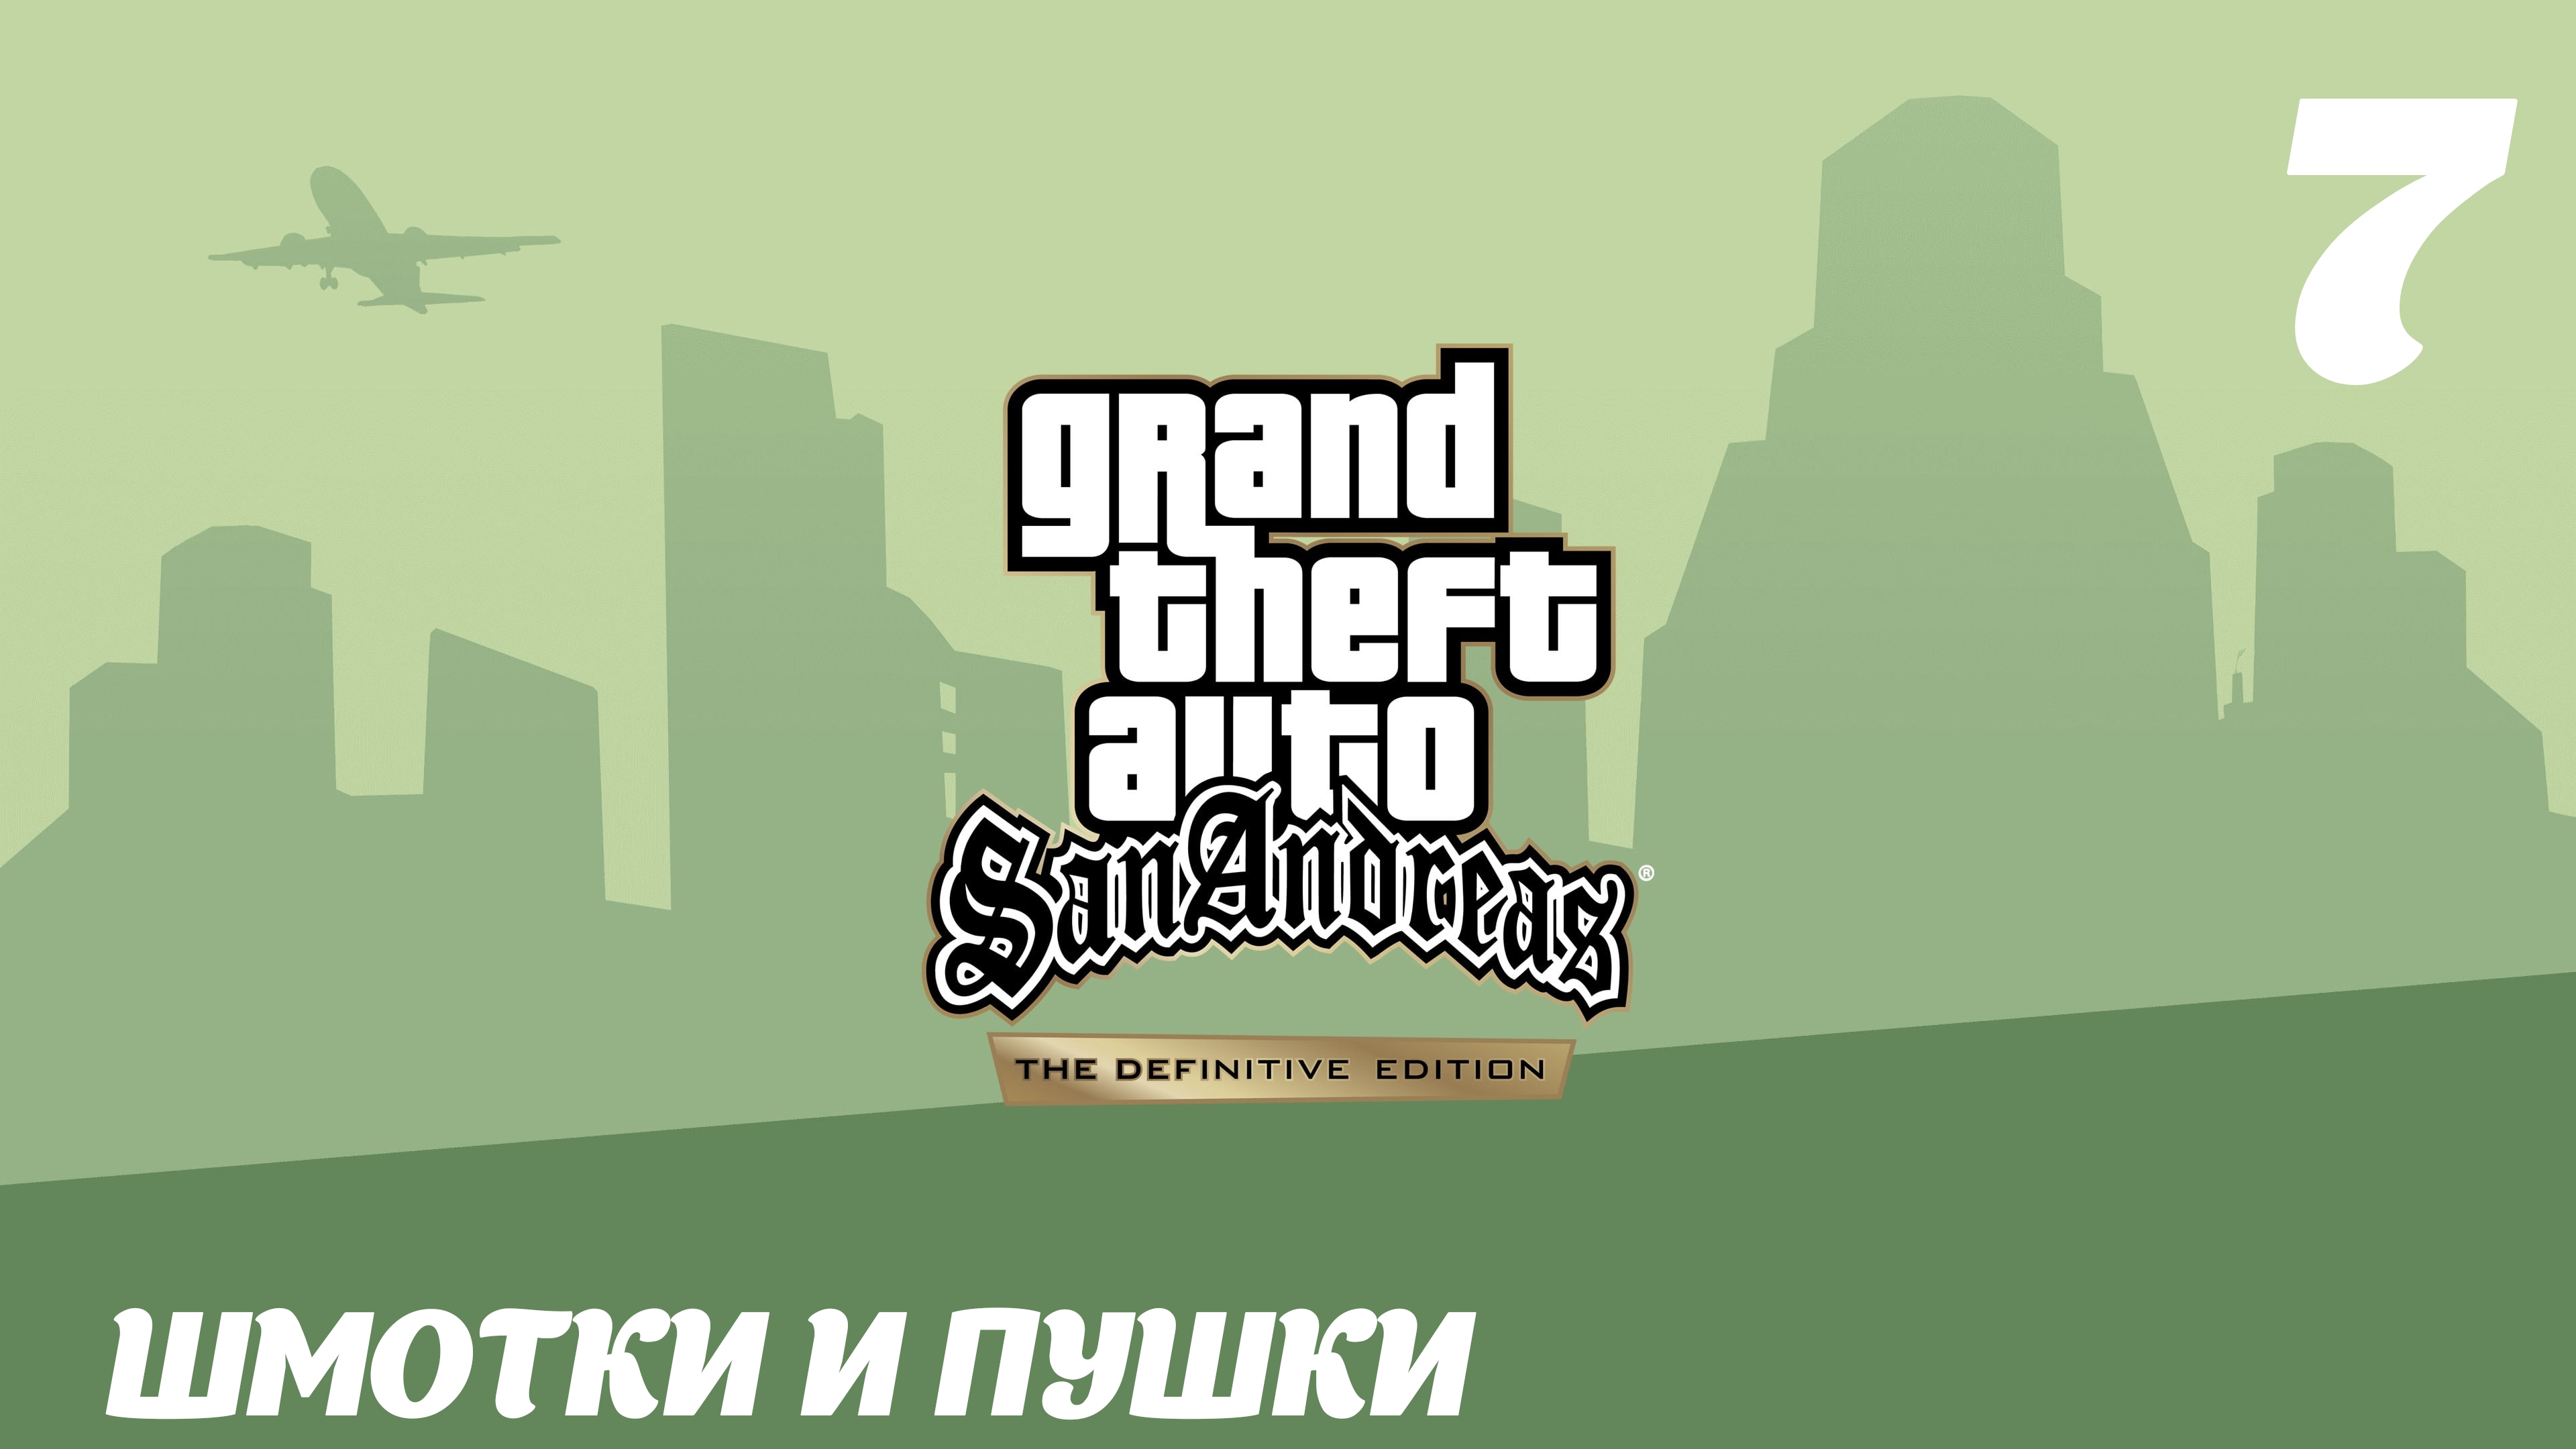 GTA San Andreas The Definitive Edition Шмотки и пушки